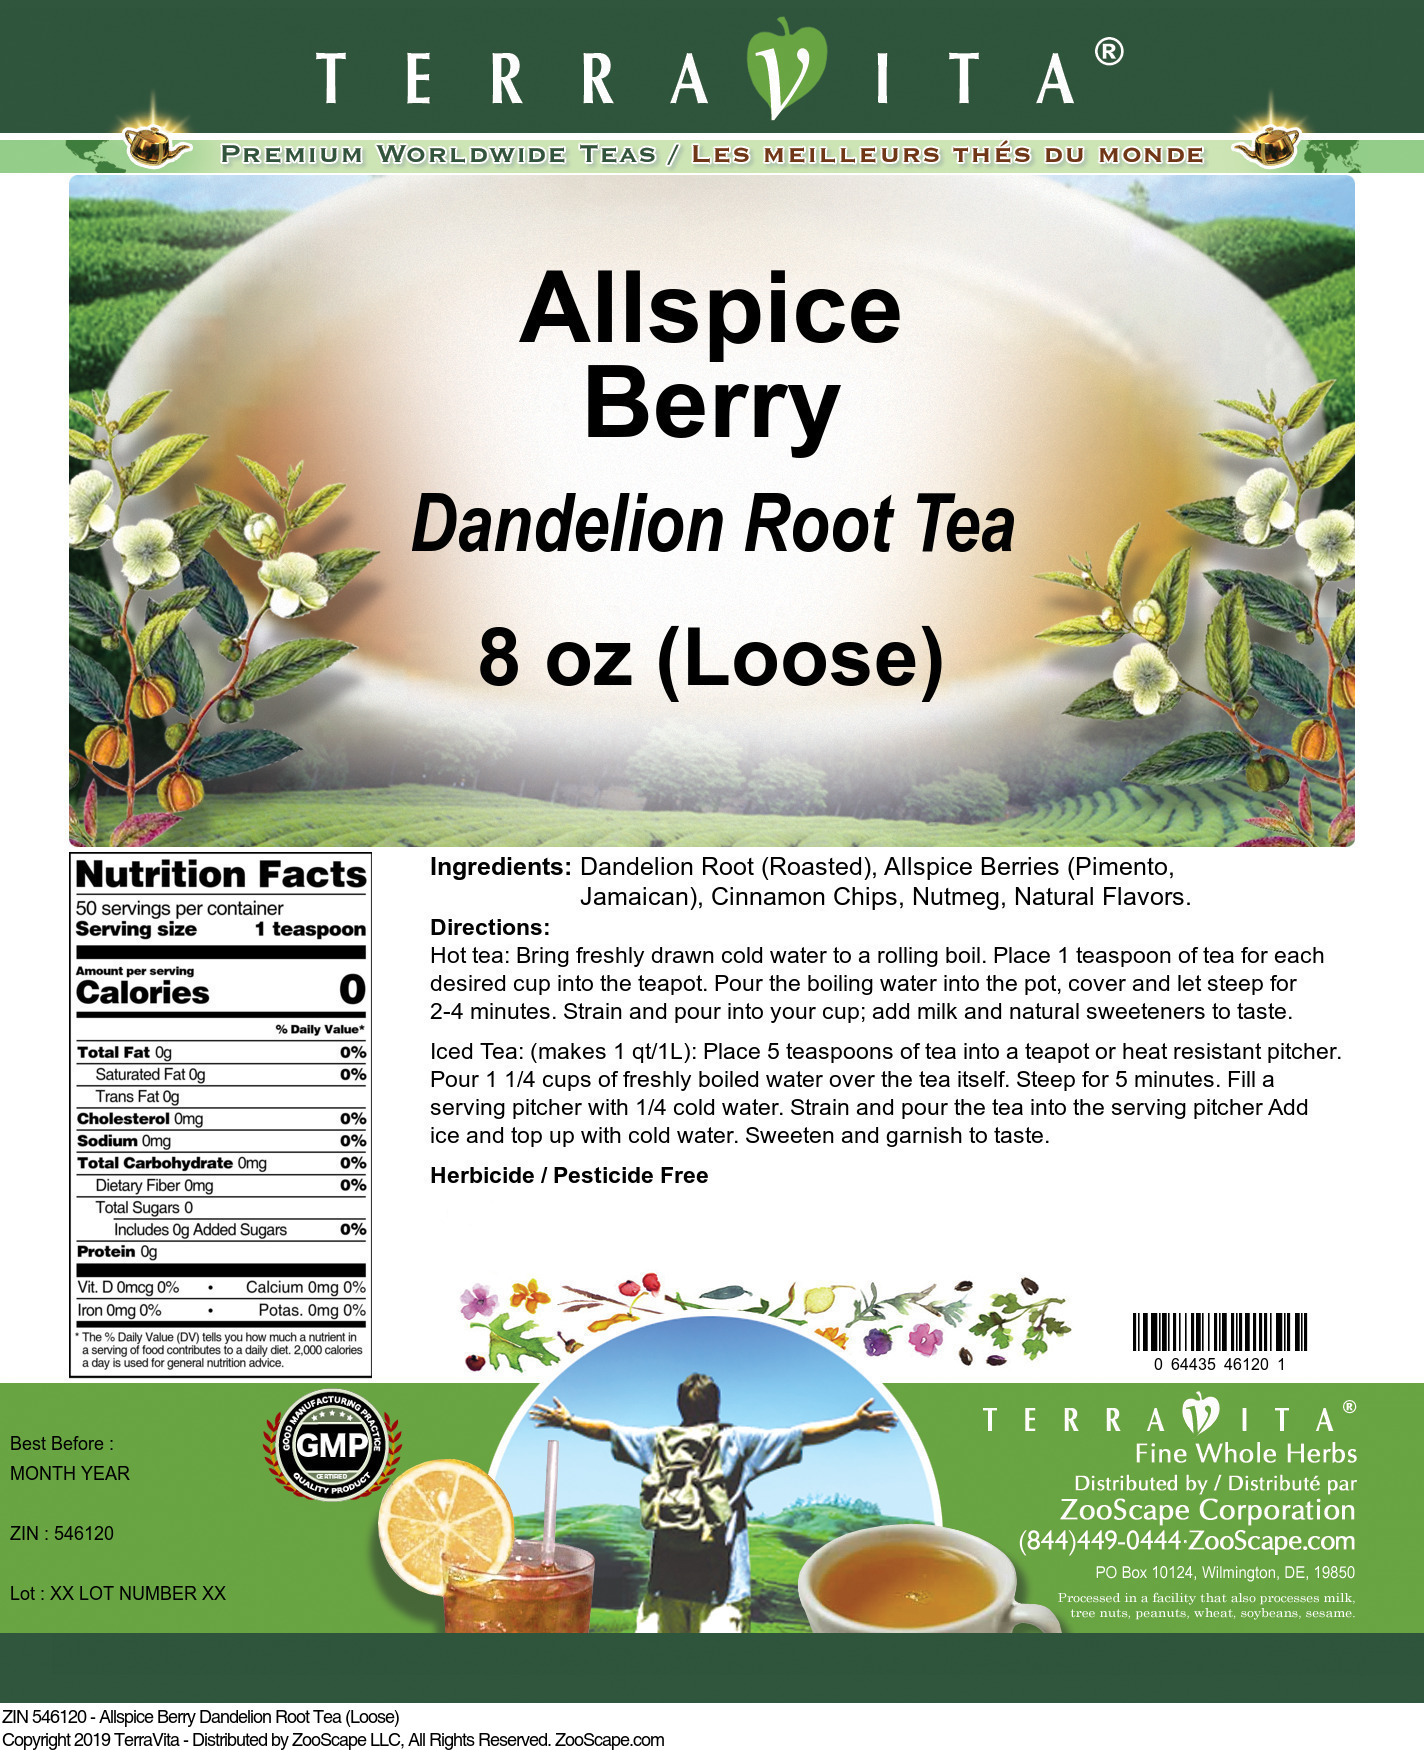 Allspice Berry Dandelion Root Tea (Loose) - Label